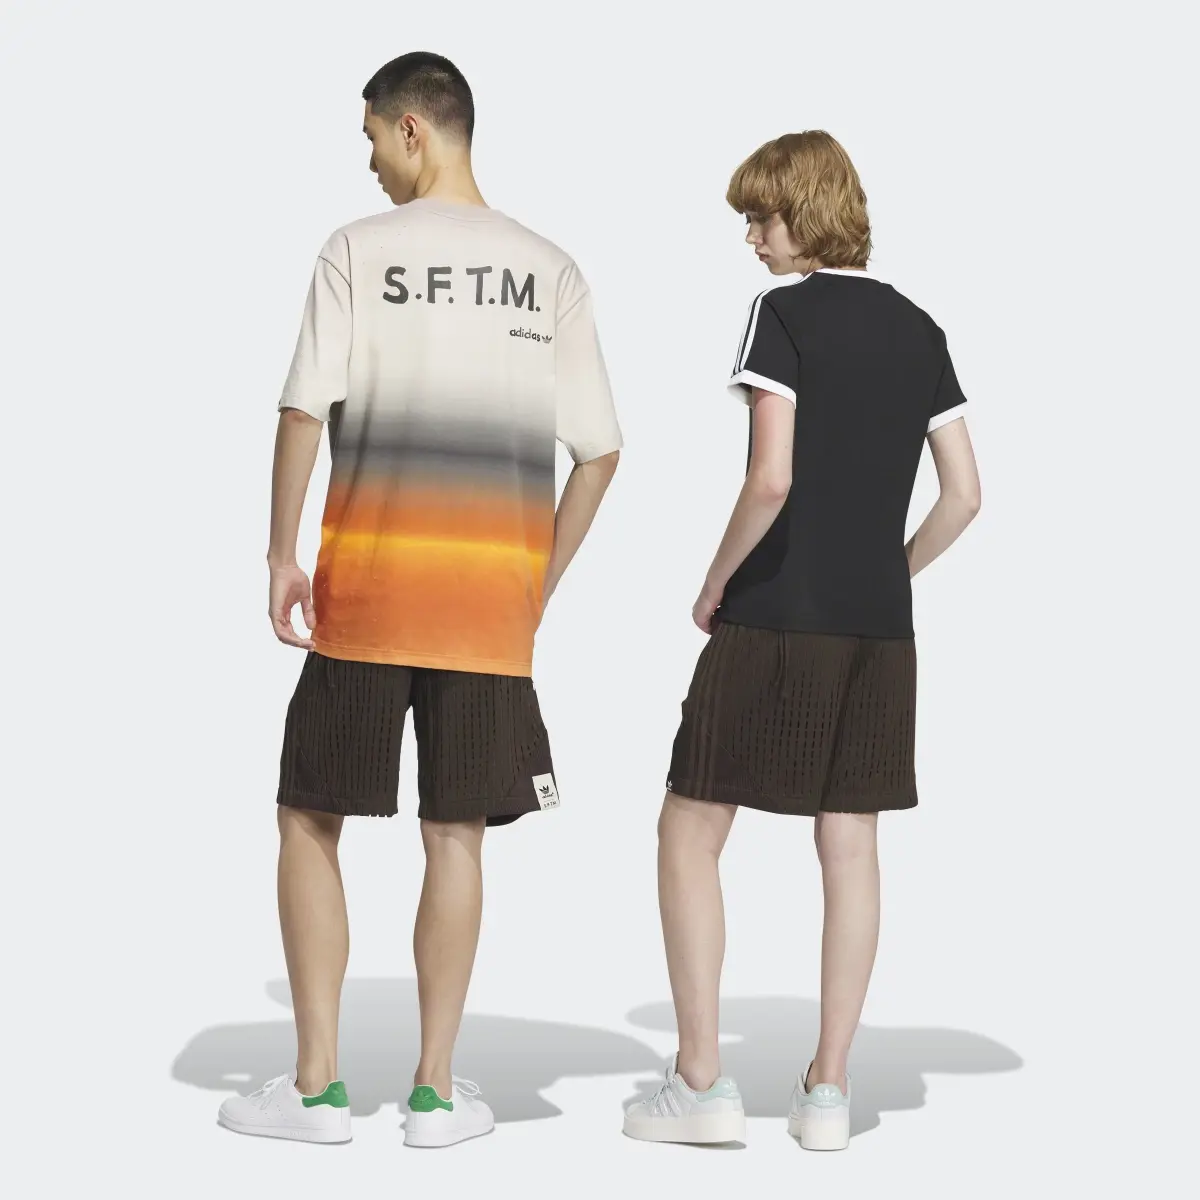 Adidas Szorty SFTM (Gender Neutral). 2